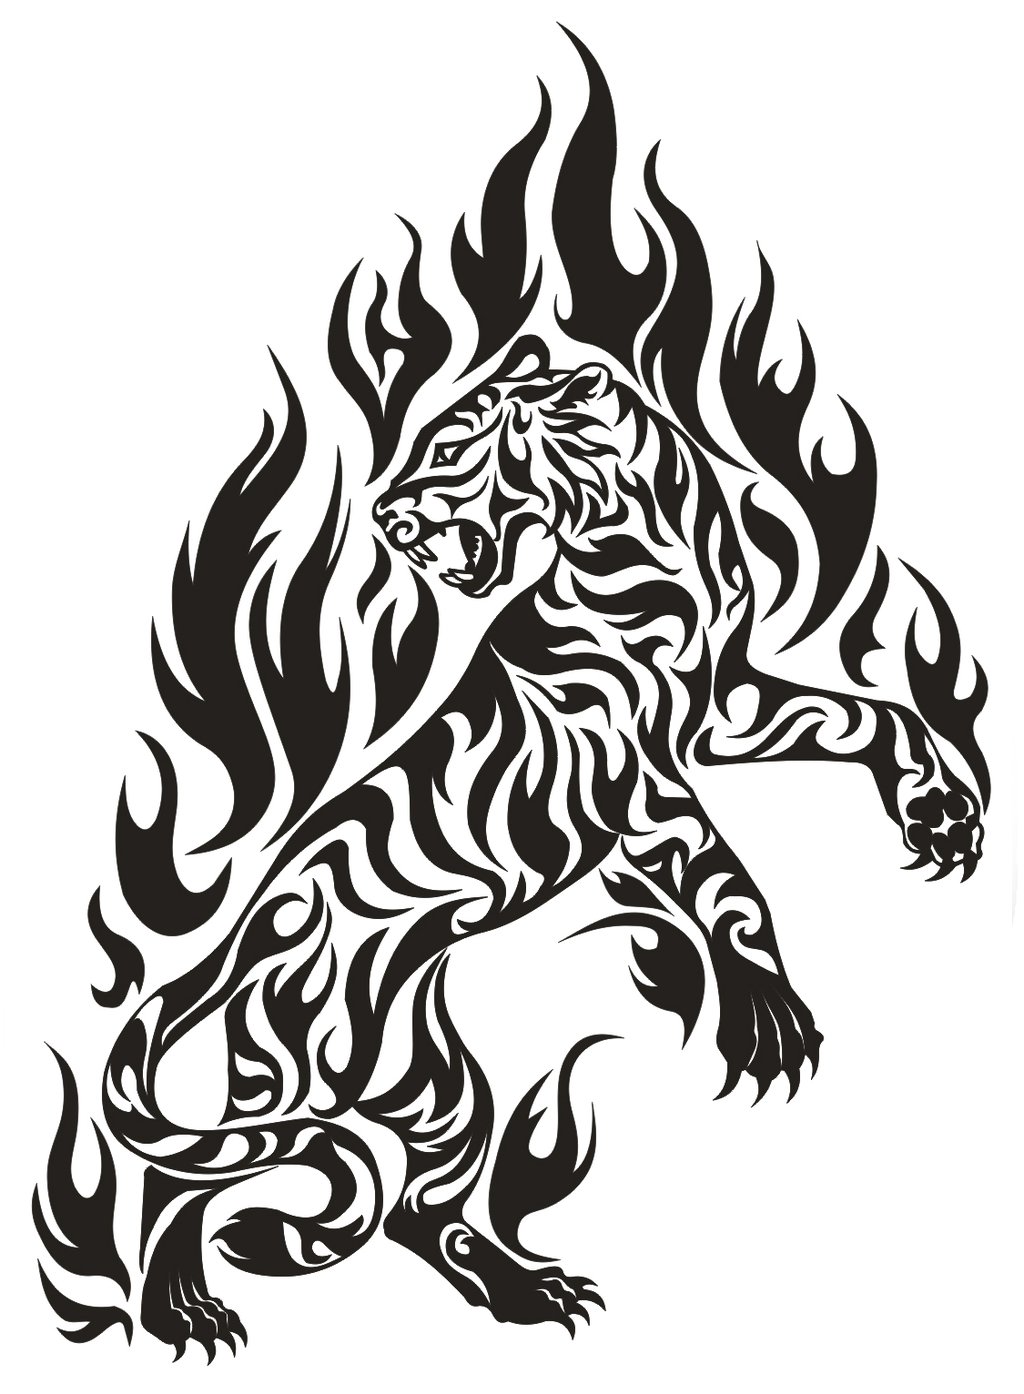 Flaming Tribal Tiger Tattoo Design